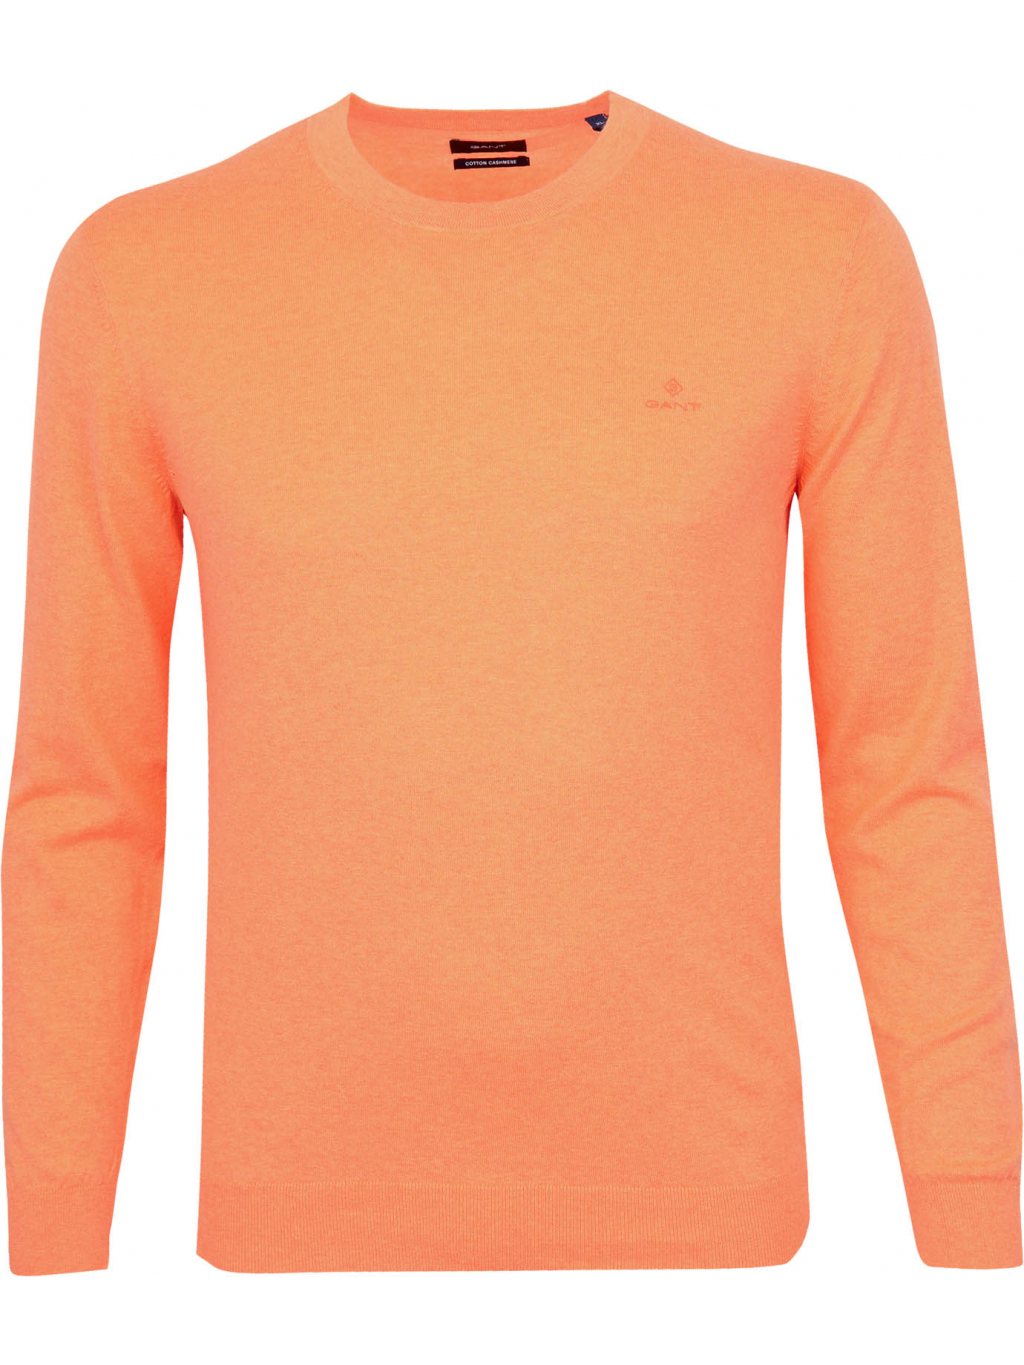 GANT Cotton Cashmere svetr oranžový